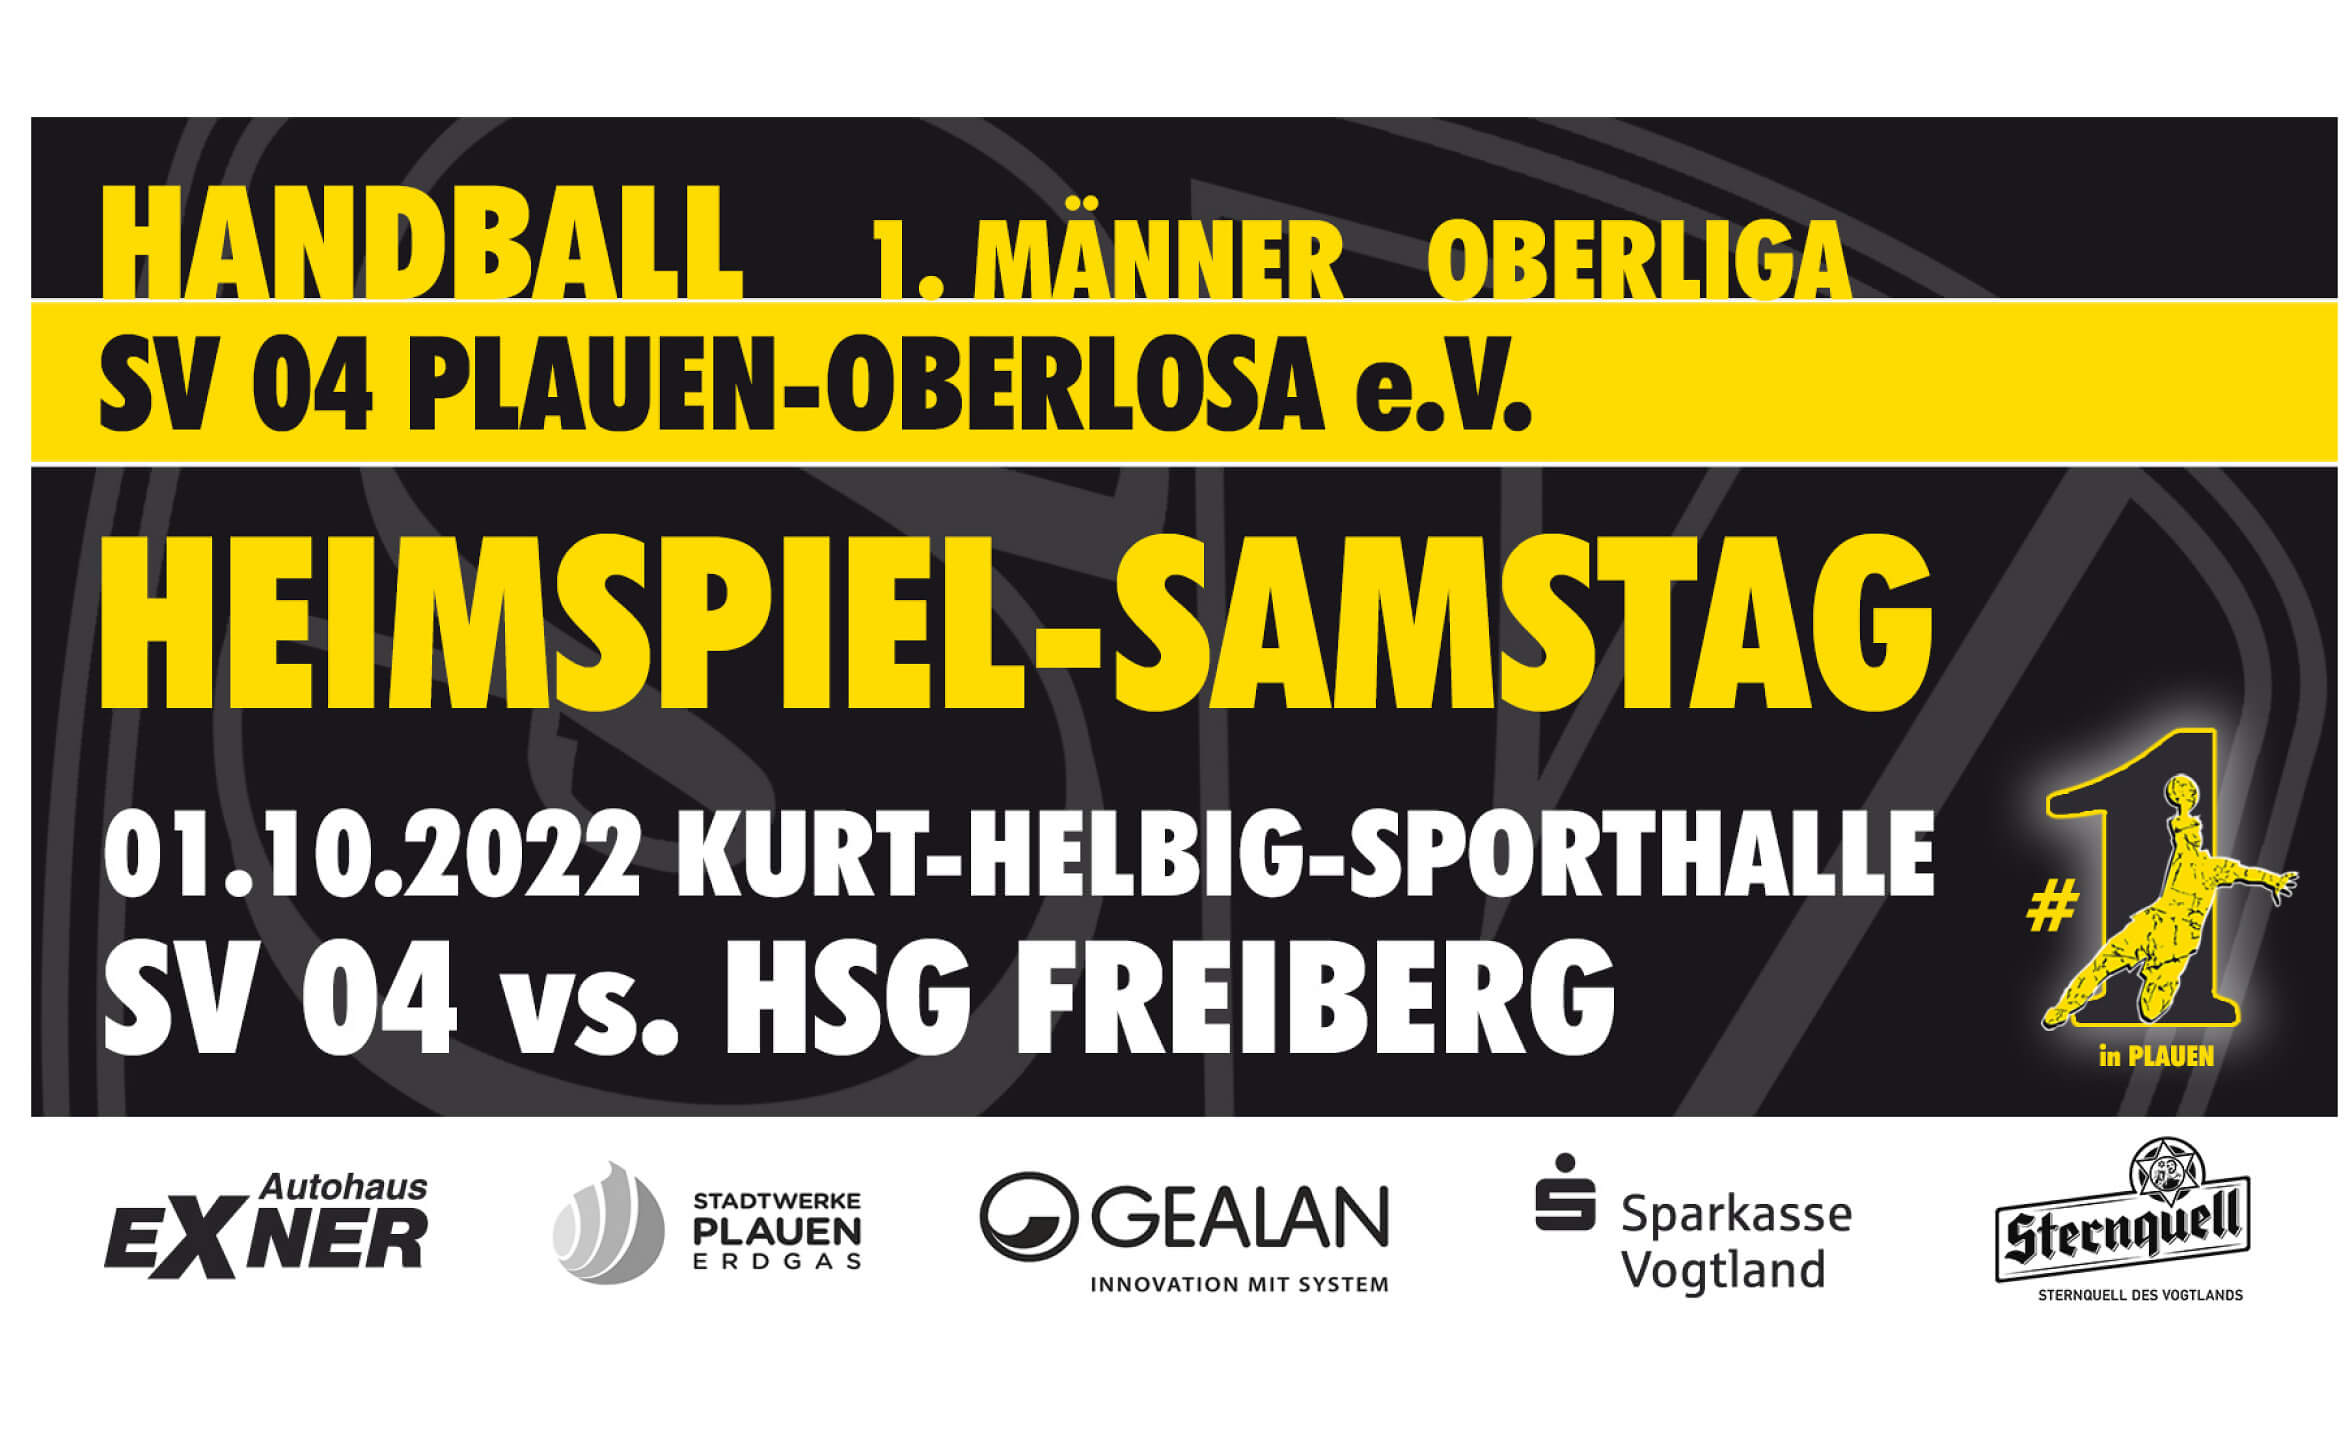 Event-Image for 'Heimspiel SV 04 Plauen-Oberlosa vs. HSG Freiberg'